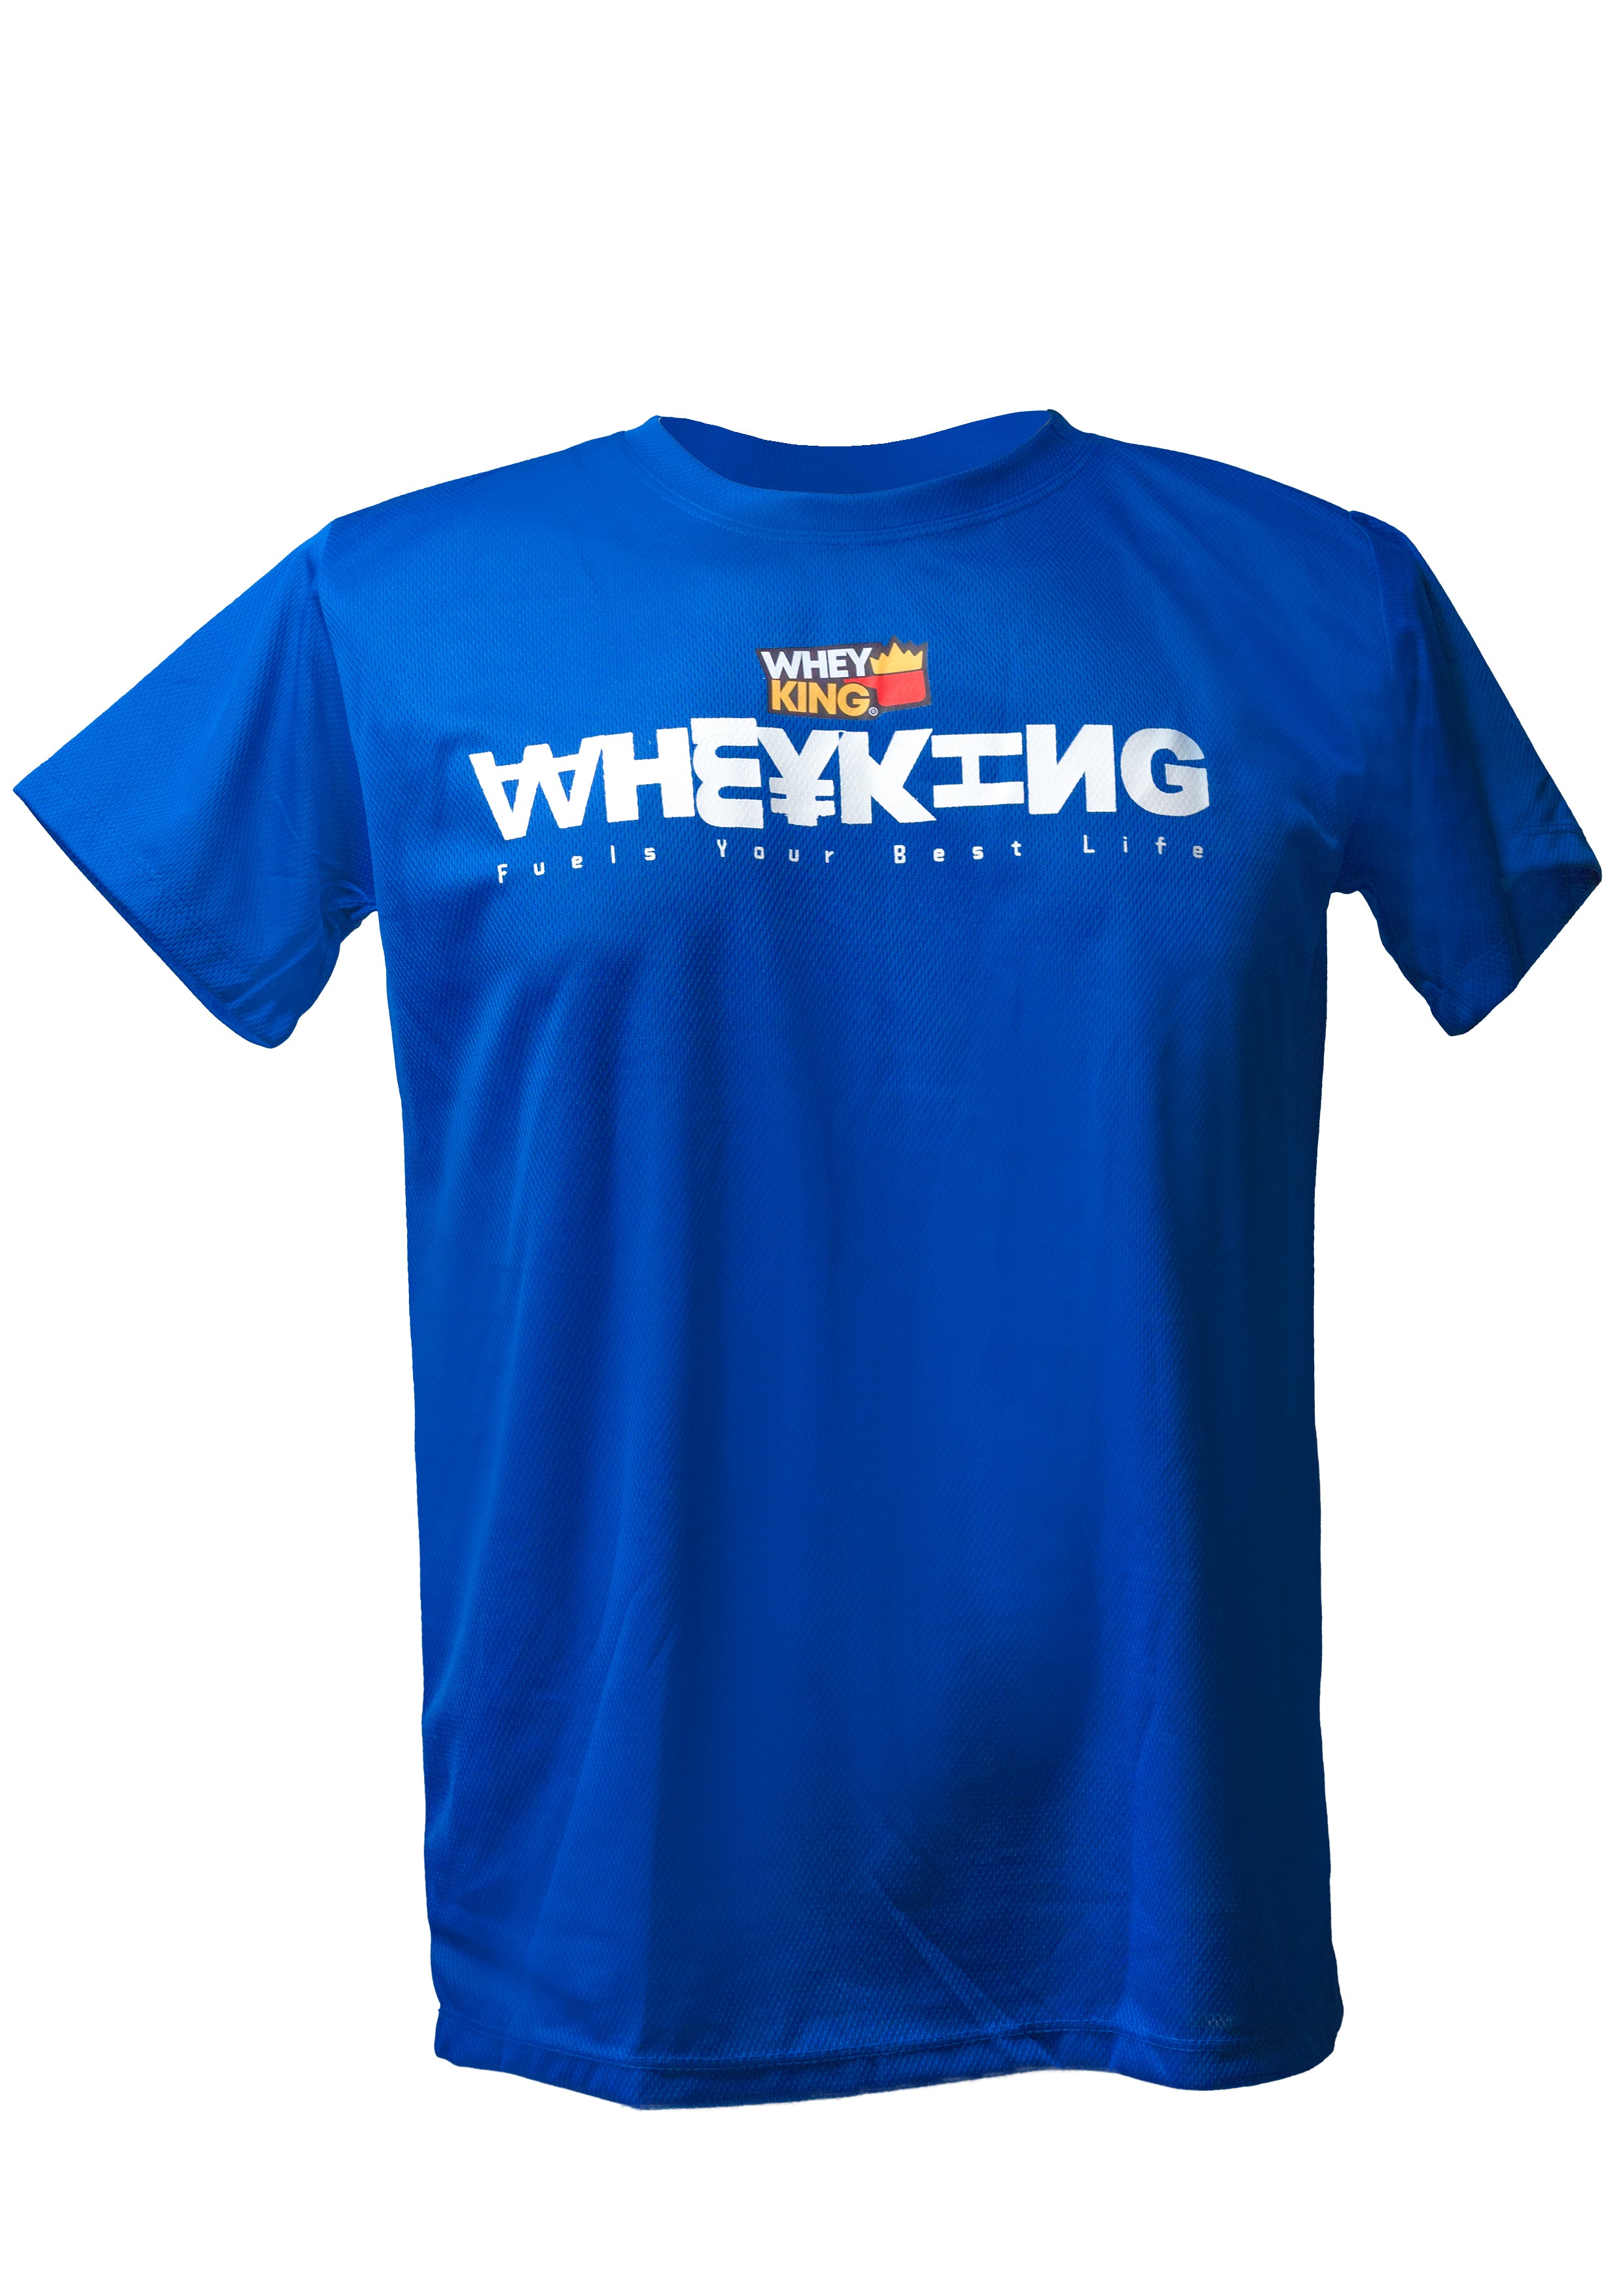 Whey King Dri-fit Logo Shirt - Free Size